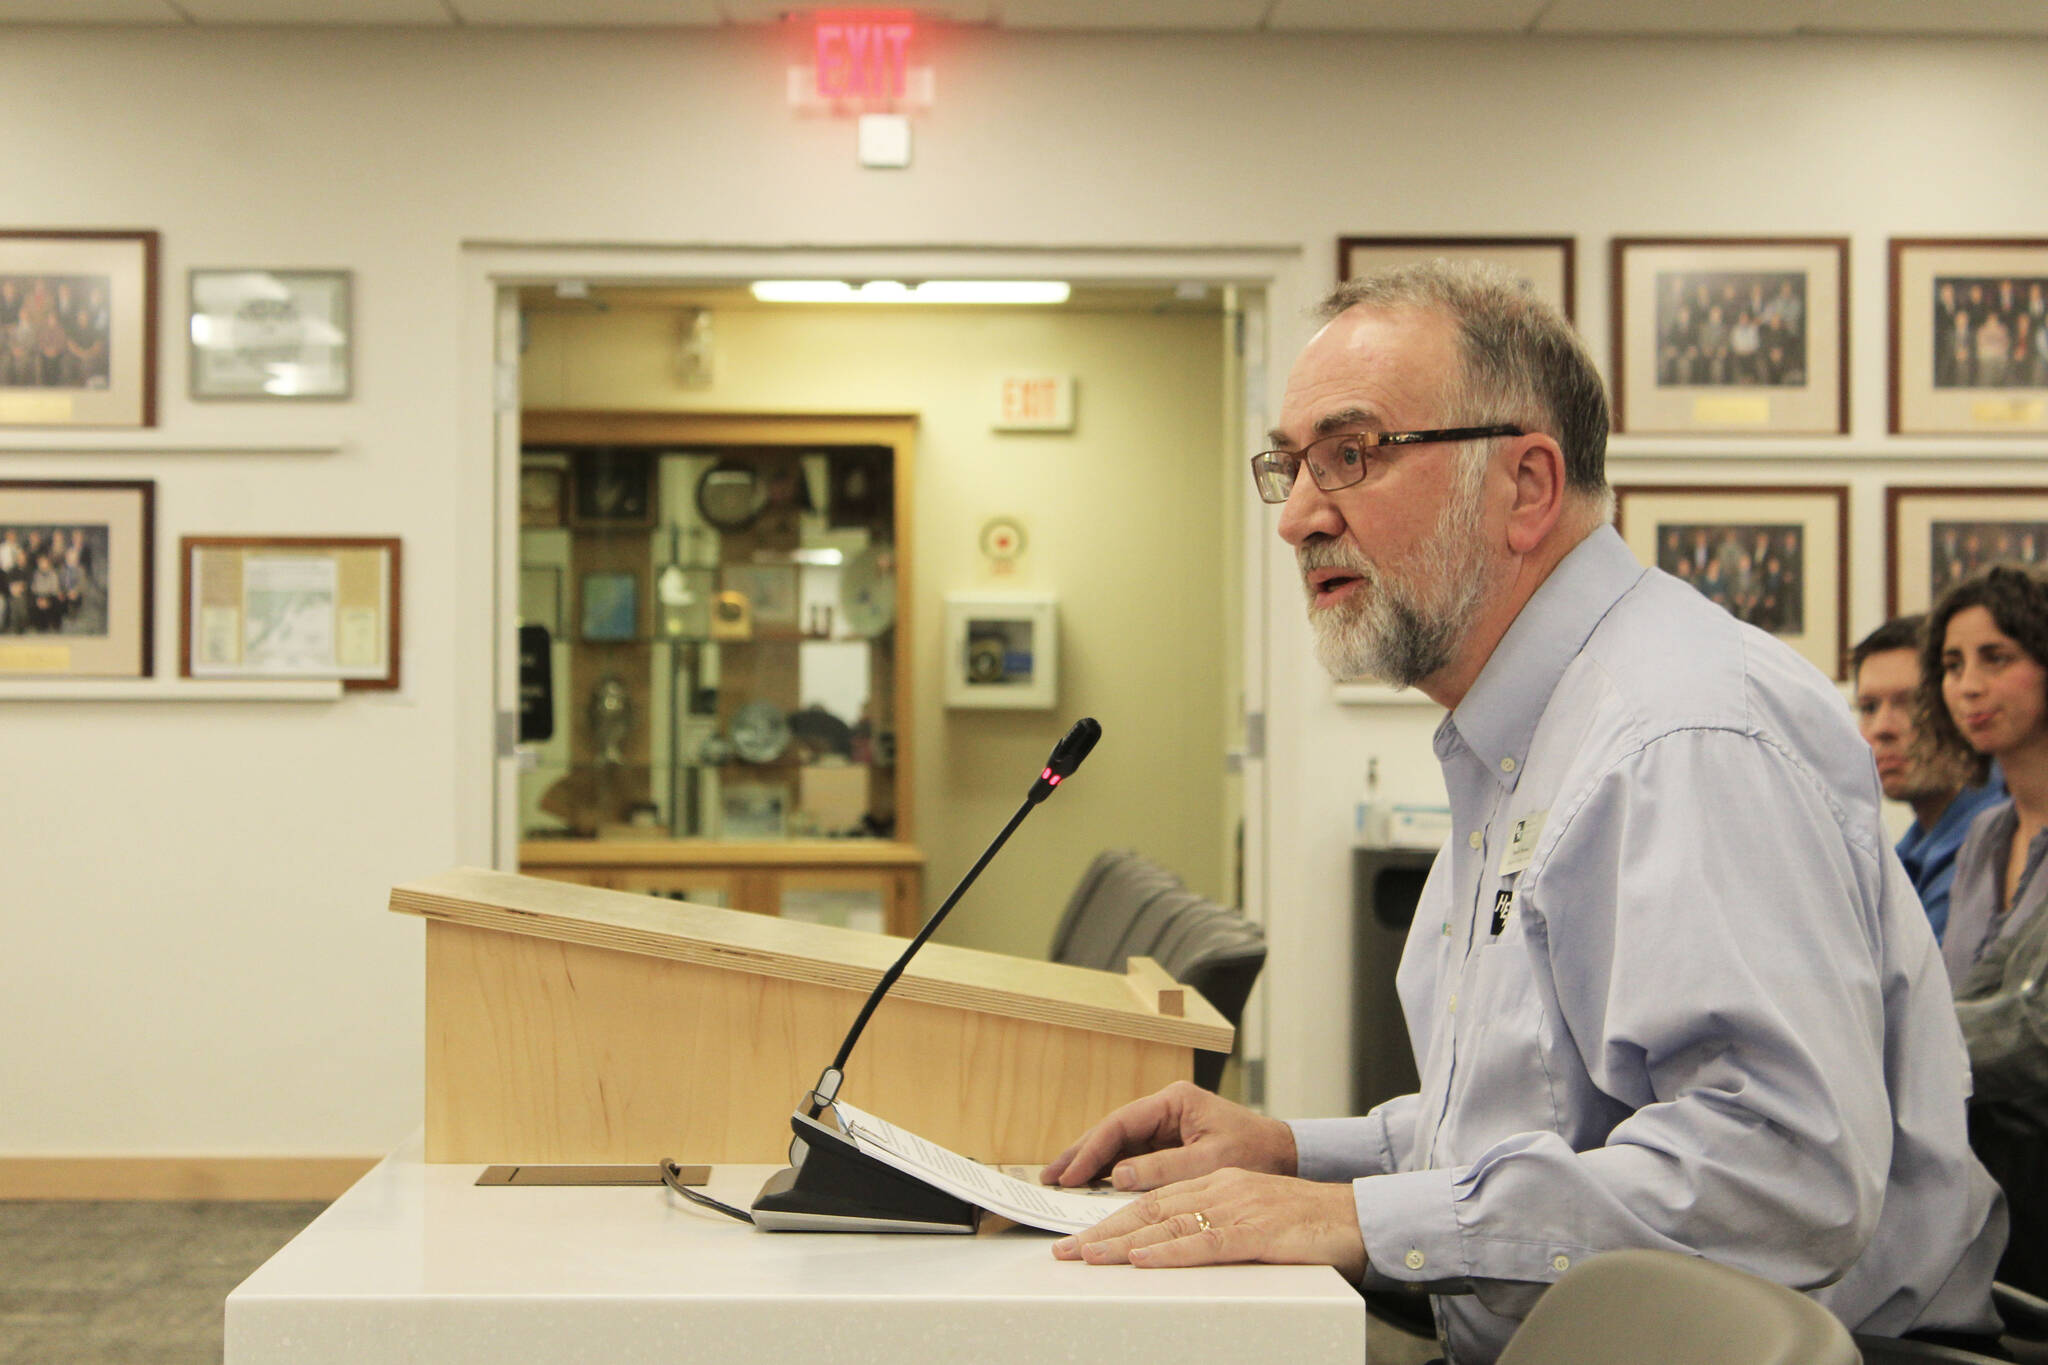 Ashlyn O’Hara/Peninsula Clarion 
Homer Electric Association Director of Strategic Services David Thomas testifies during a meeting of the Kenai Peninsula Borough Assembly on Oct. 12 in Soldotna.